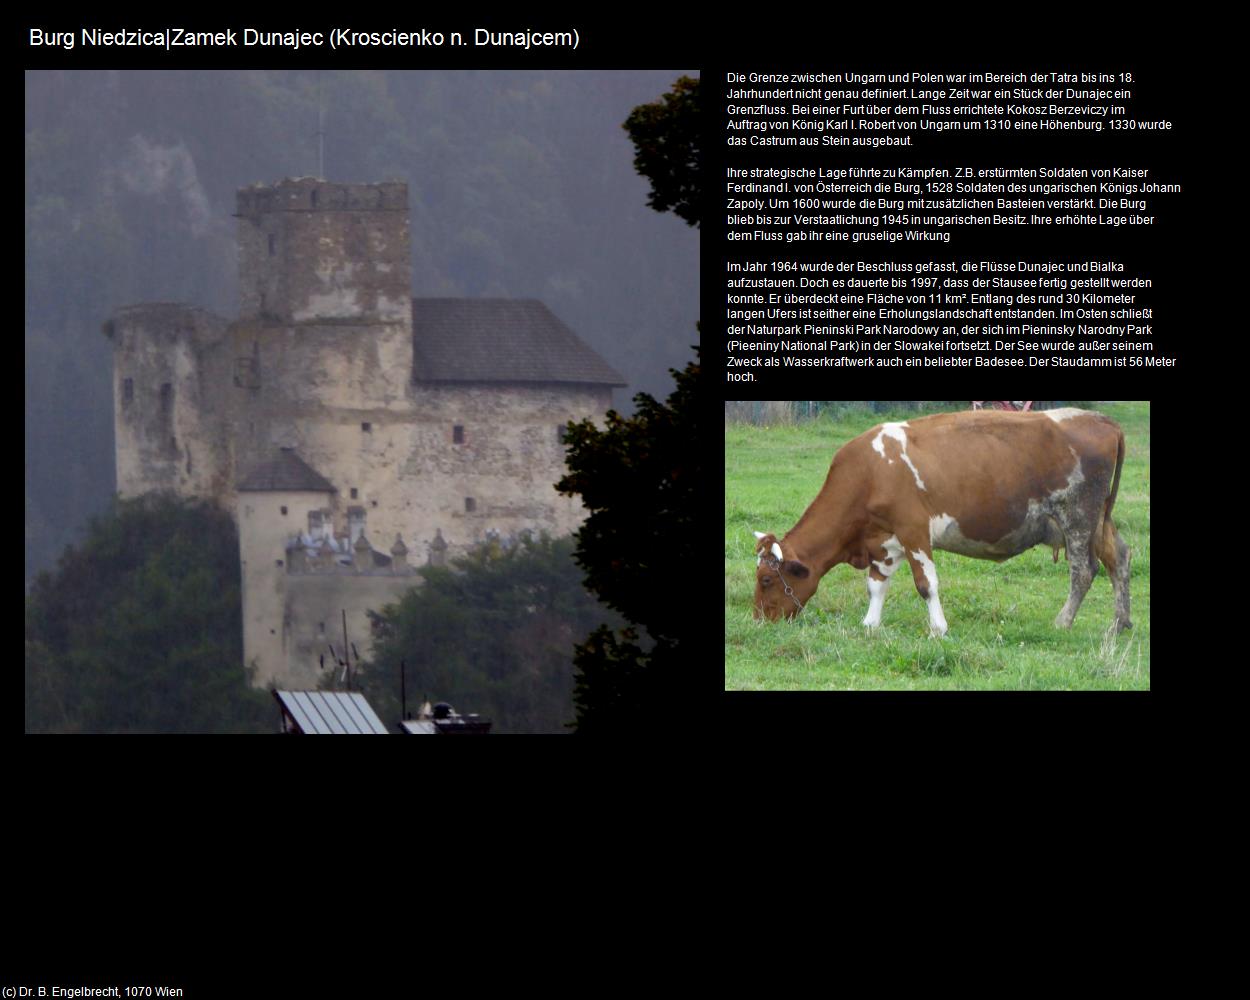 Burg Niedzica (Kroscienko n. Dunajcem) in POLEN-Galizien